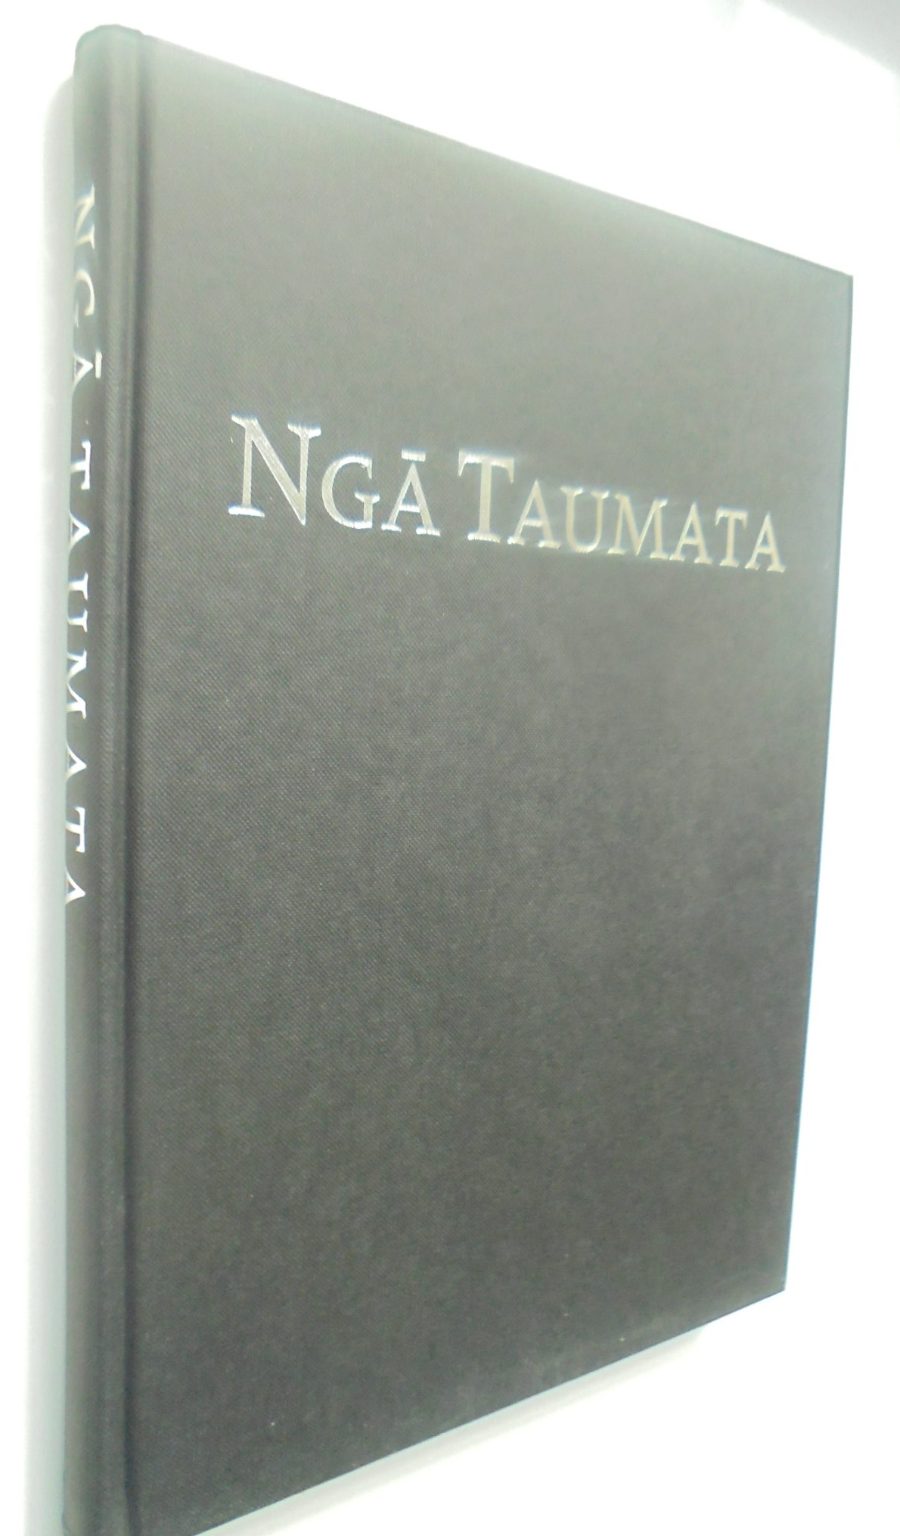 Nga Taumata: A Portrait of Ngati Kahungunu, 1870-1906. By Ngati Huata (Edited by).